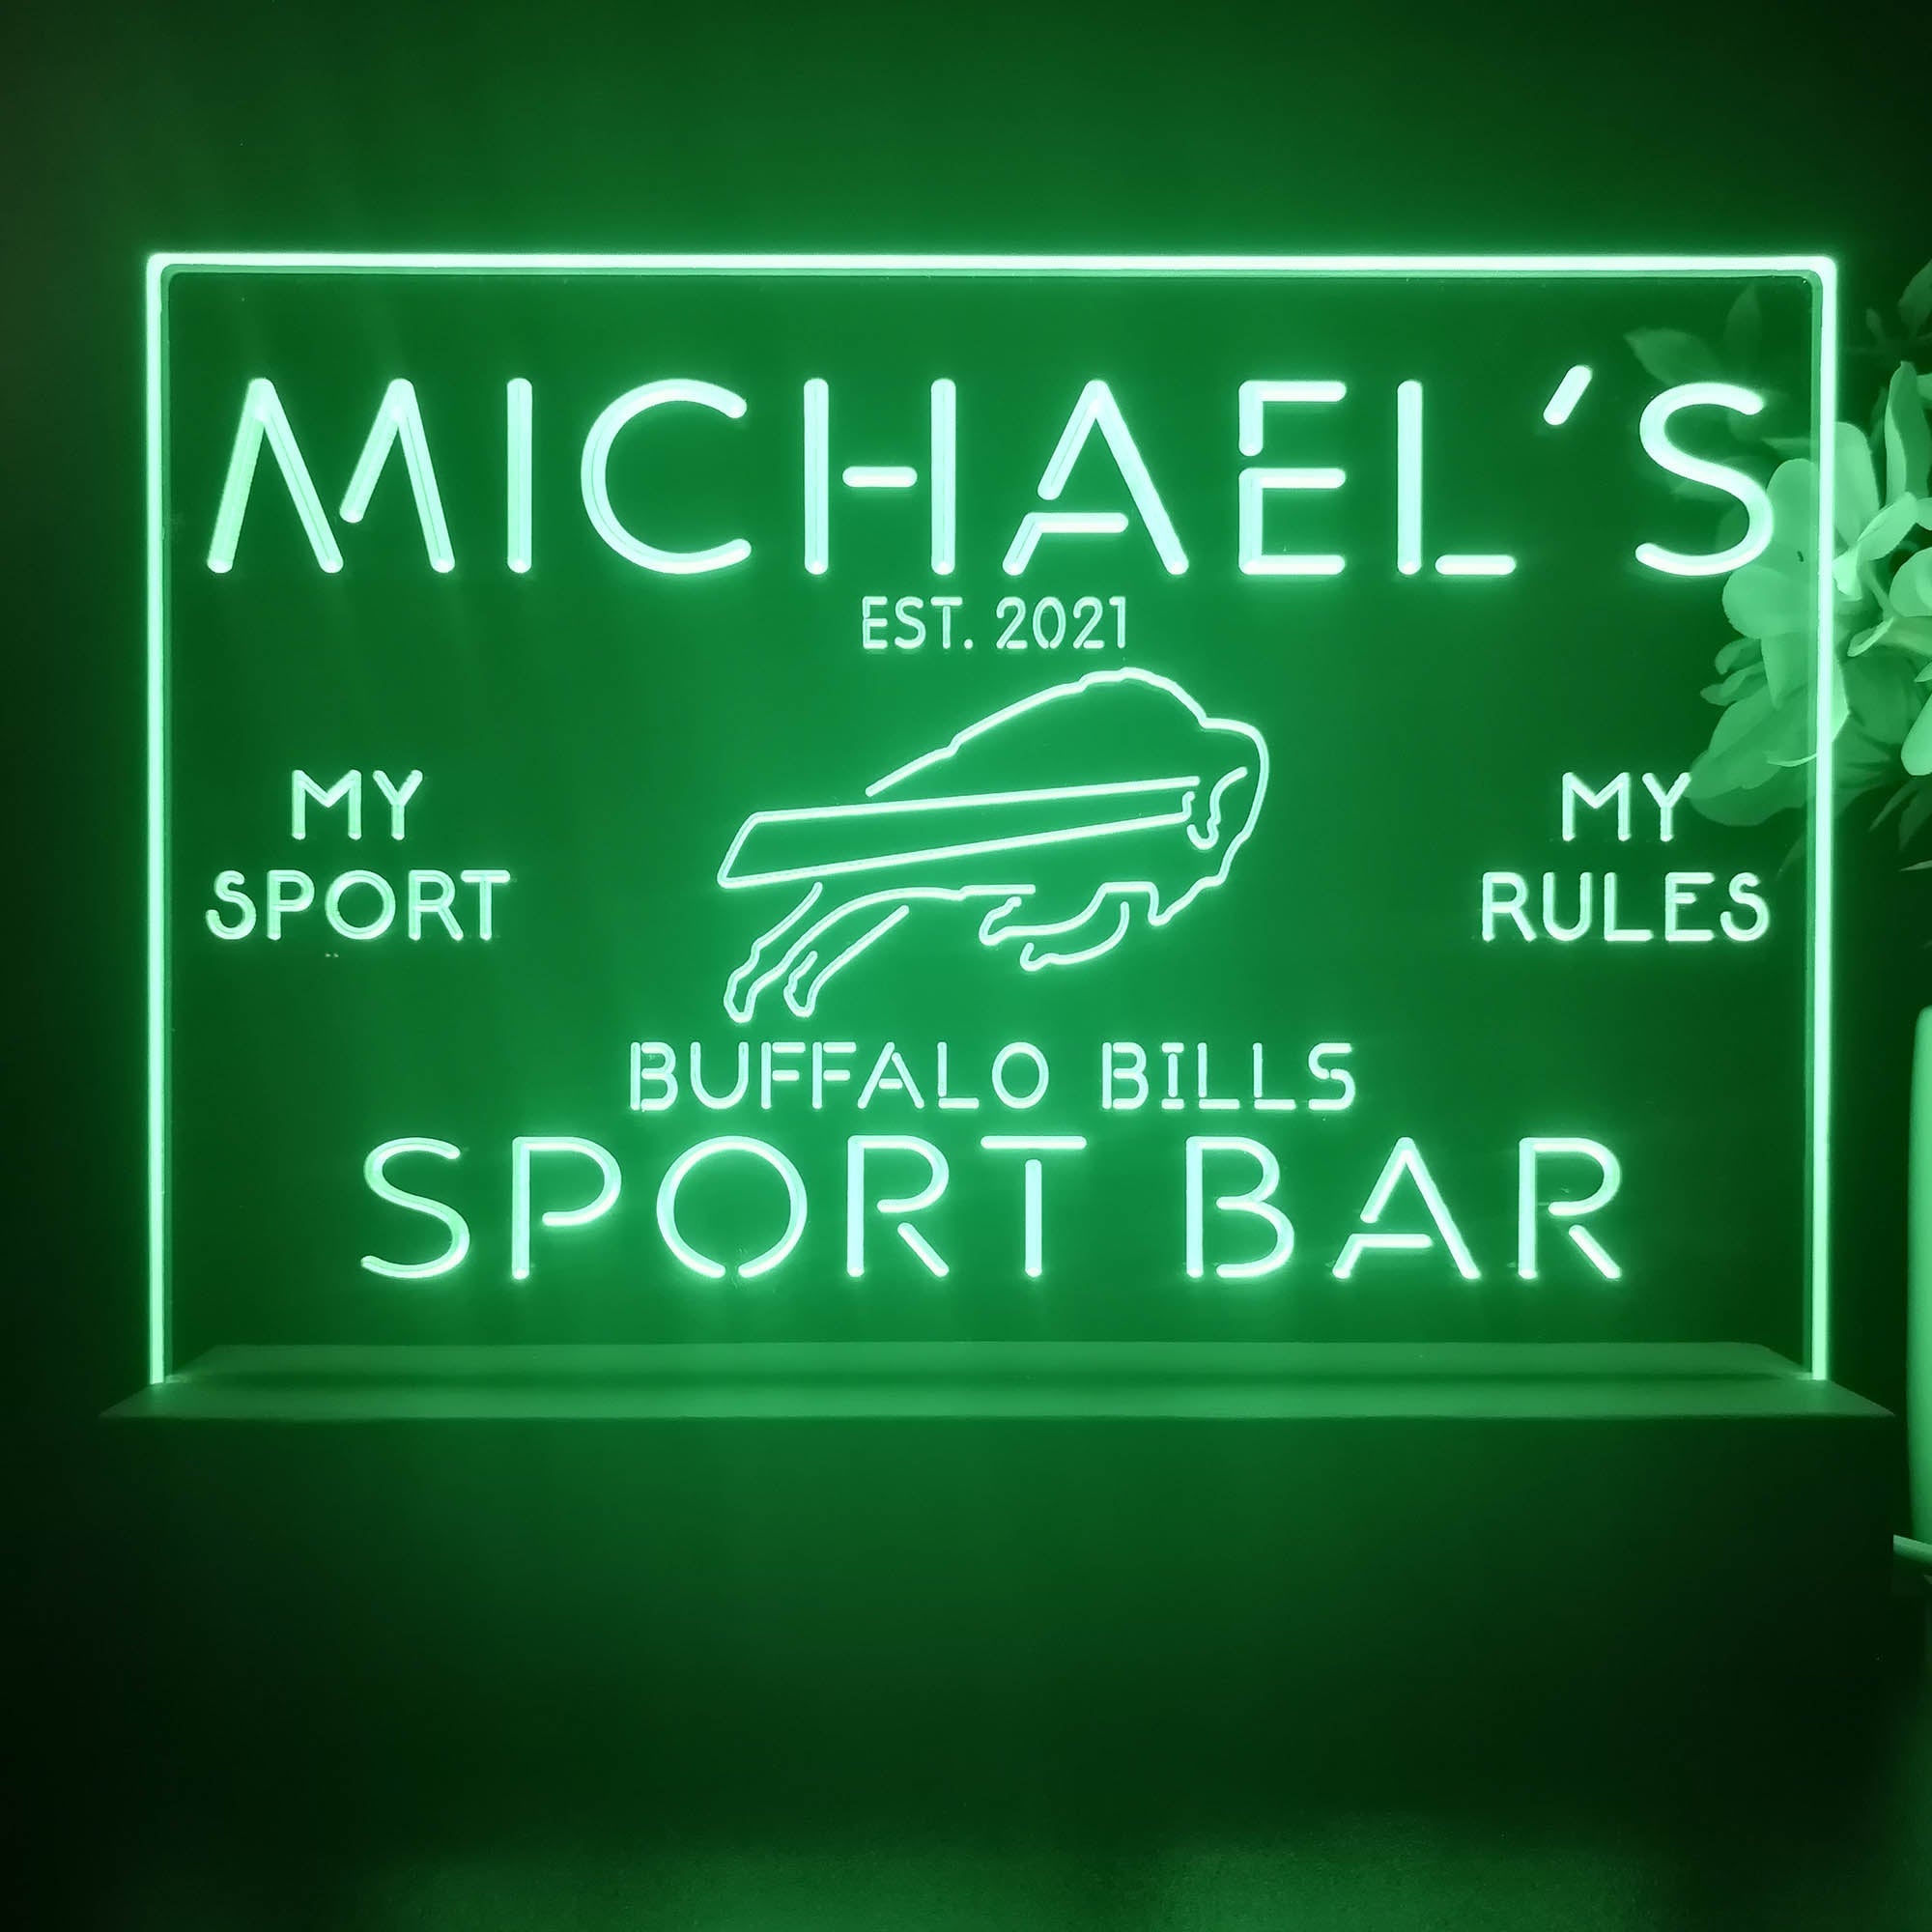 Personalized Buffalos Bill Souvenir Neon LED Night Light Sign